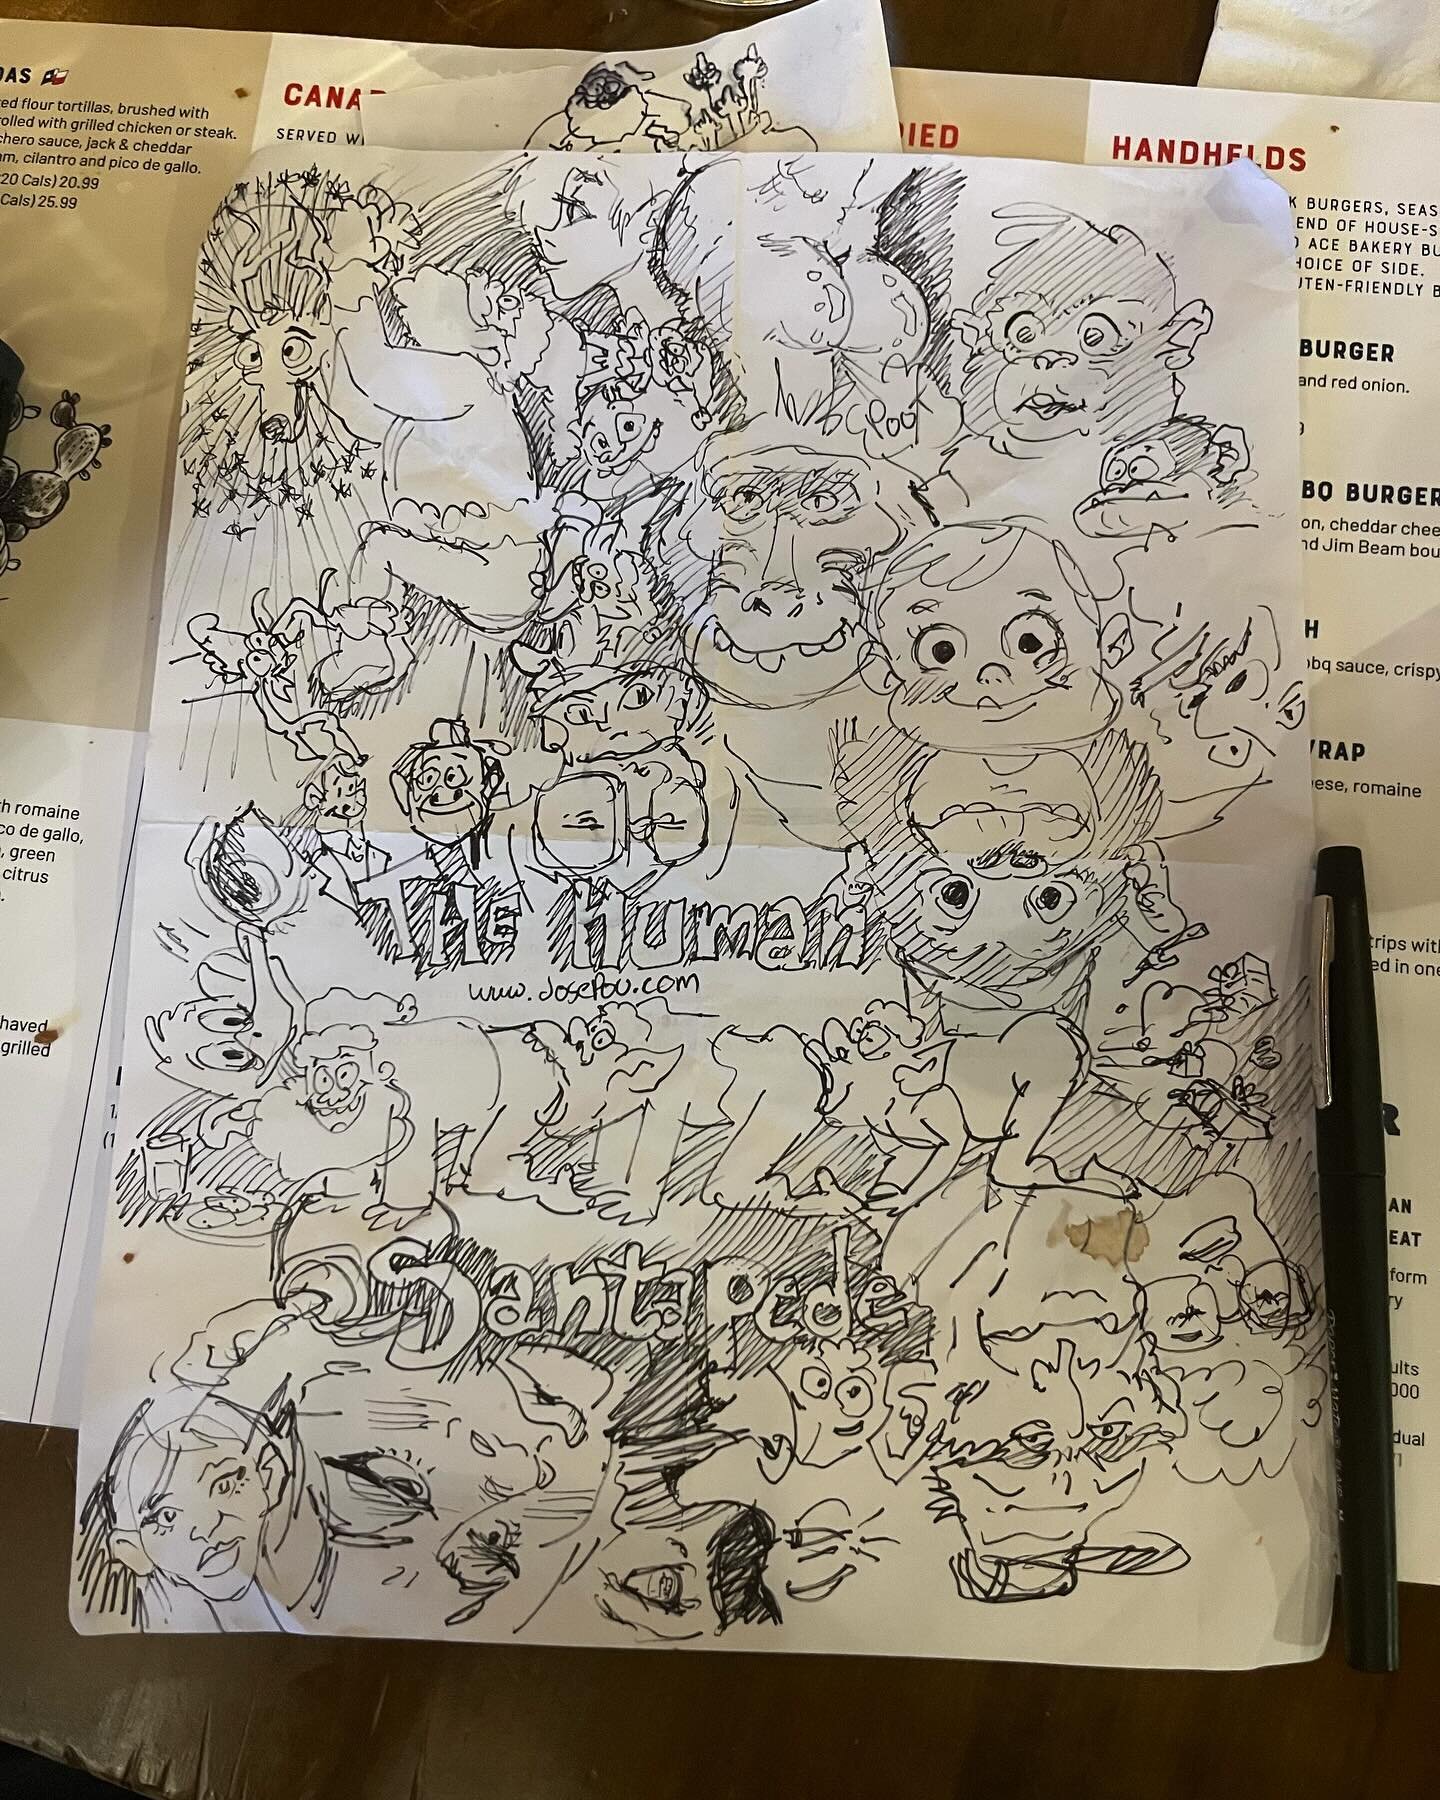 Restaurant doodles
#dumbdrawings